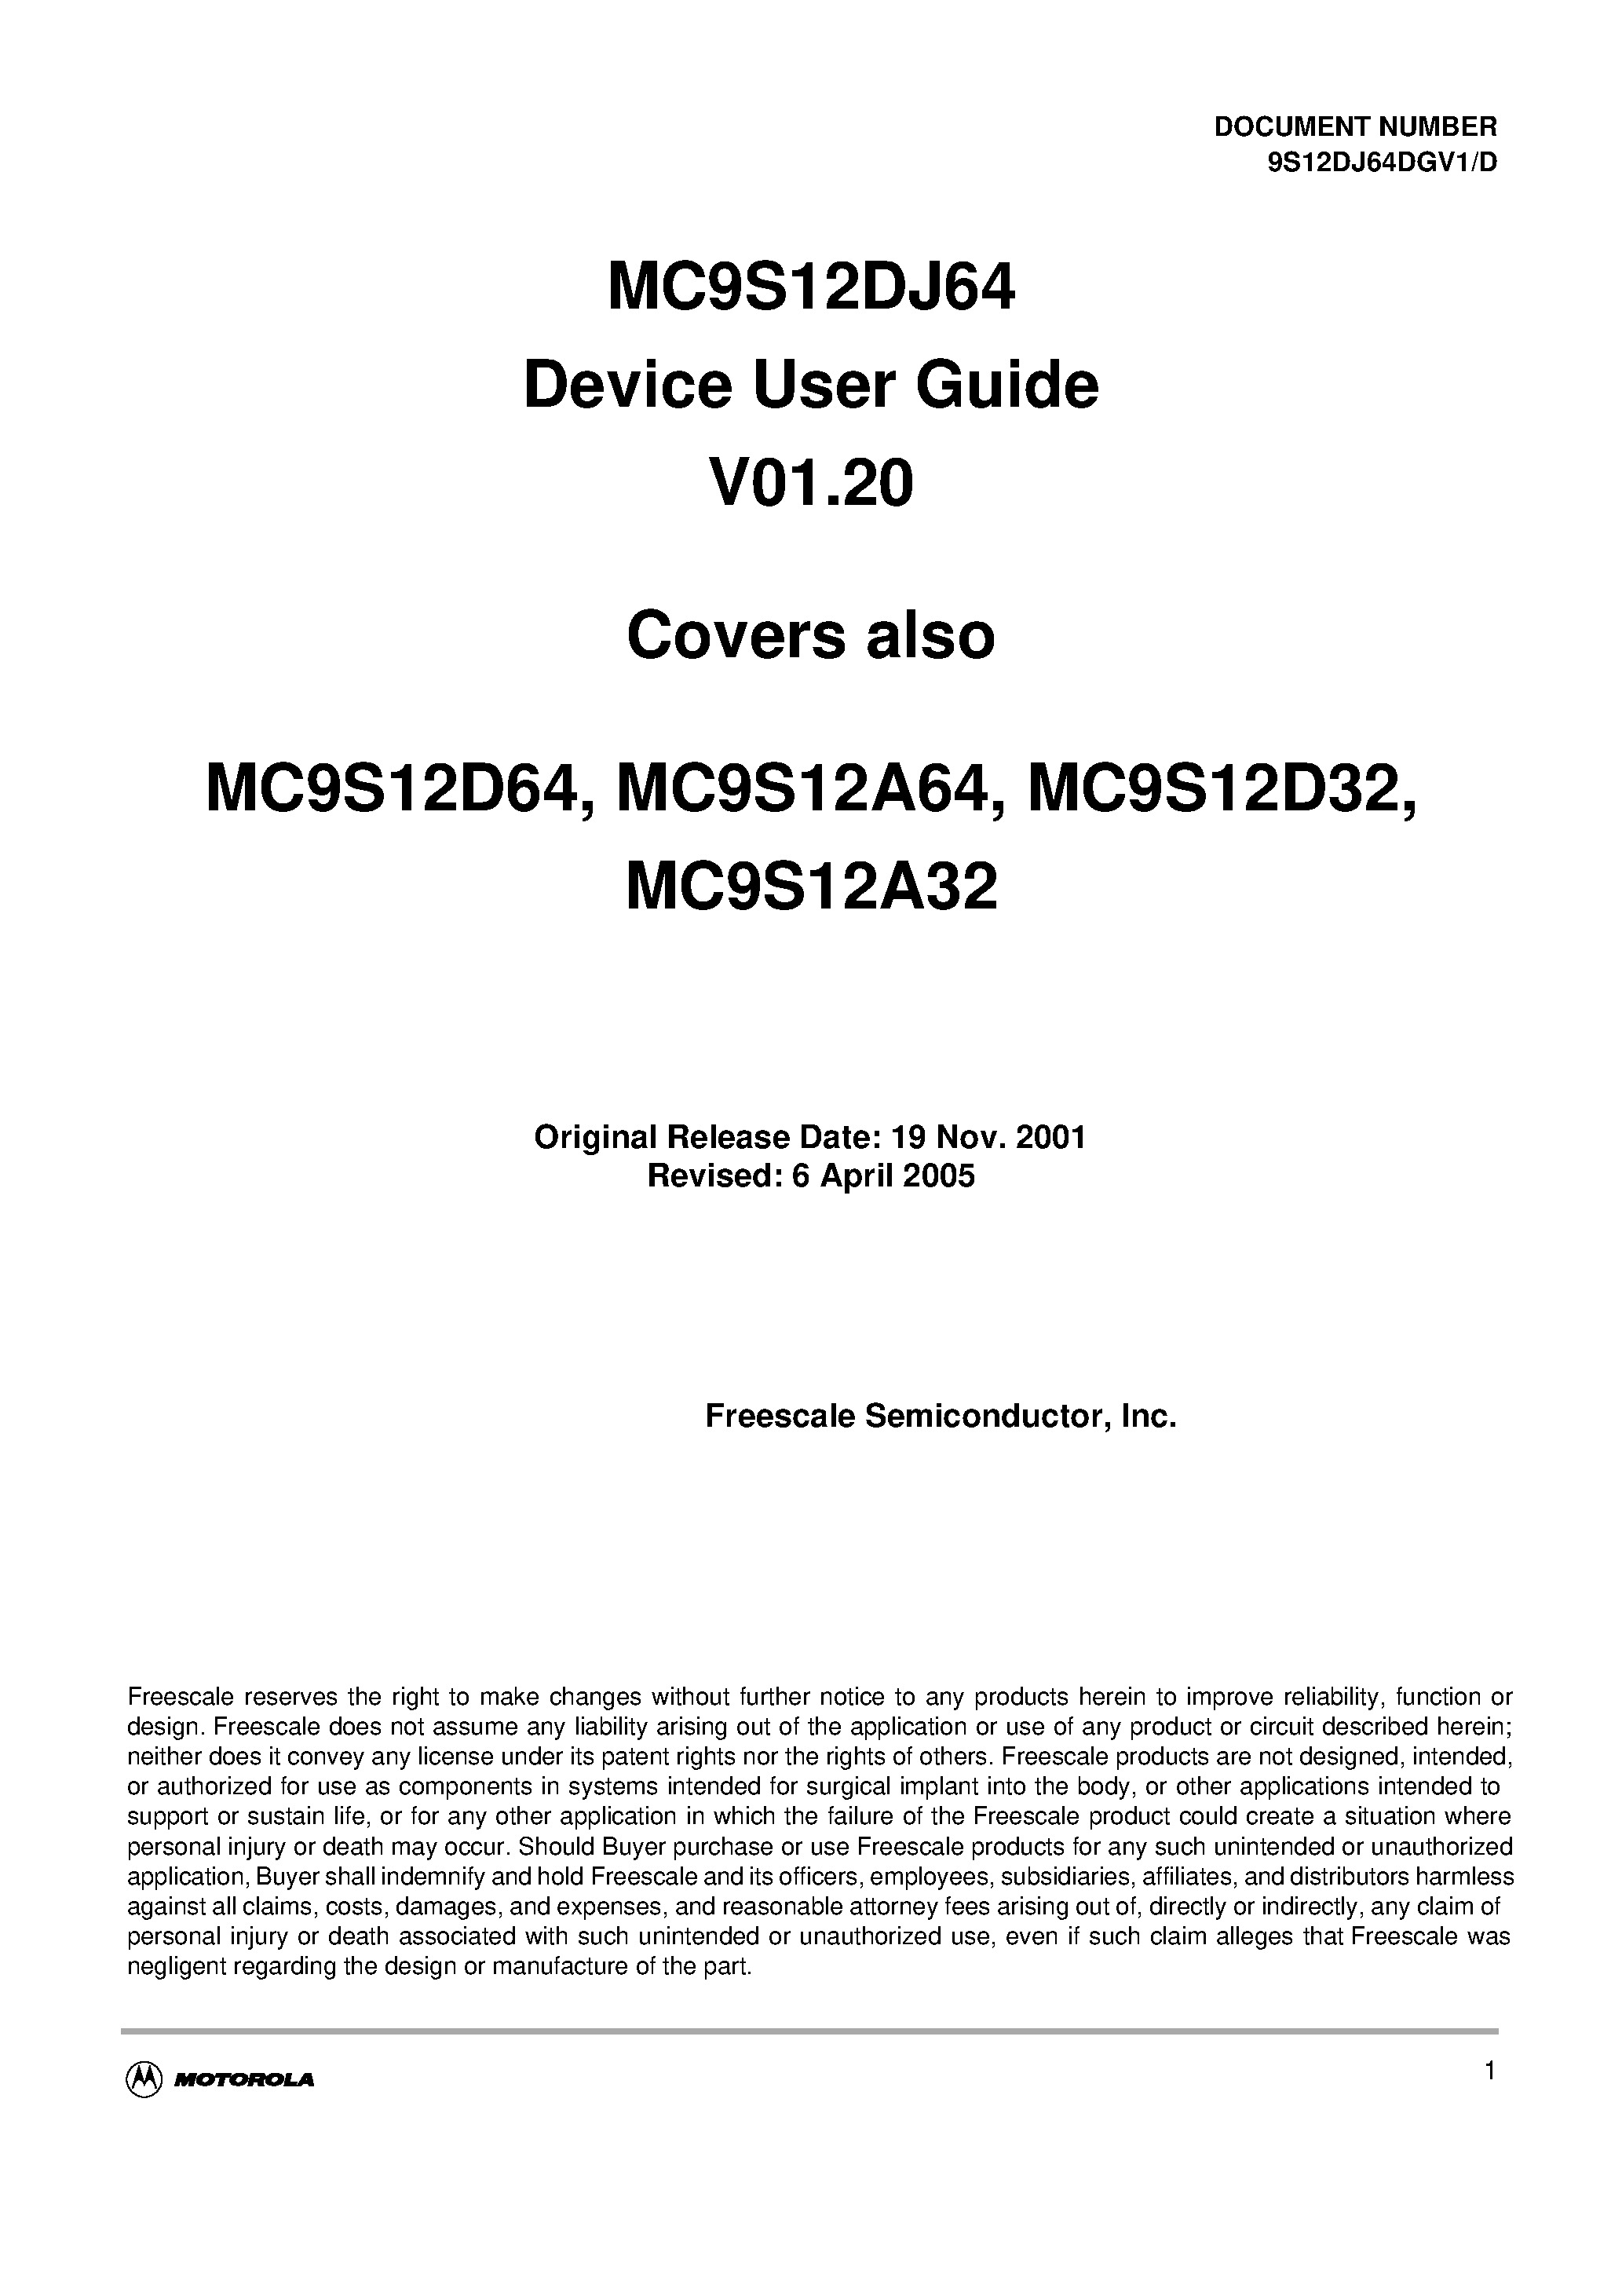 Datasheet MC9S12A32 - (MC9S12xxx) Device User Guide V01.20 page 1